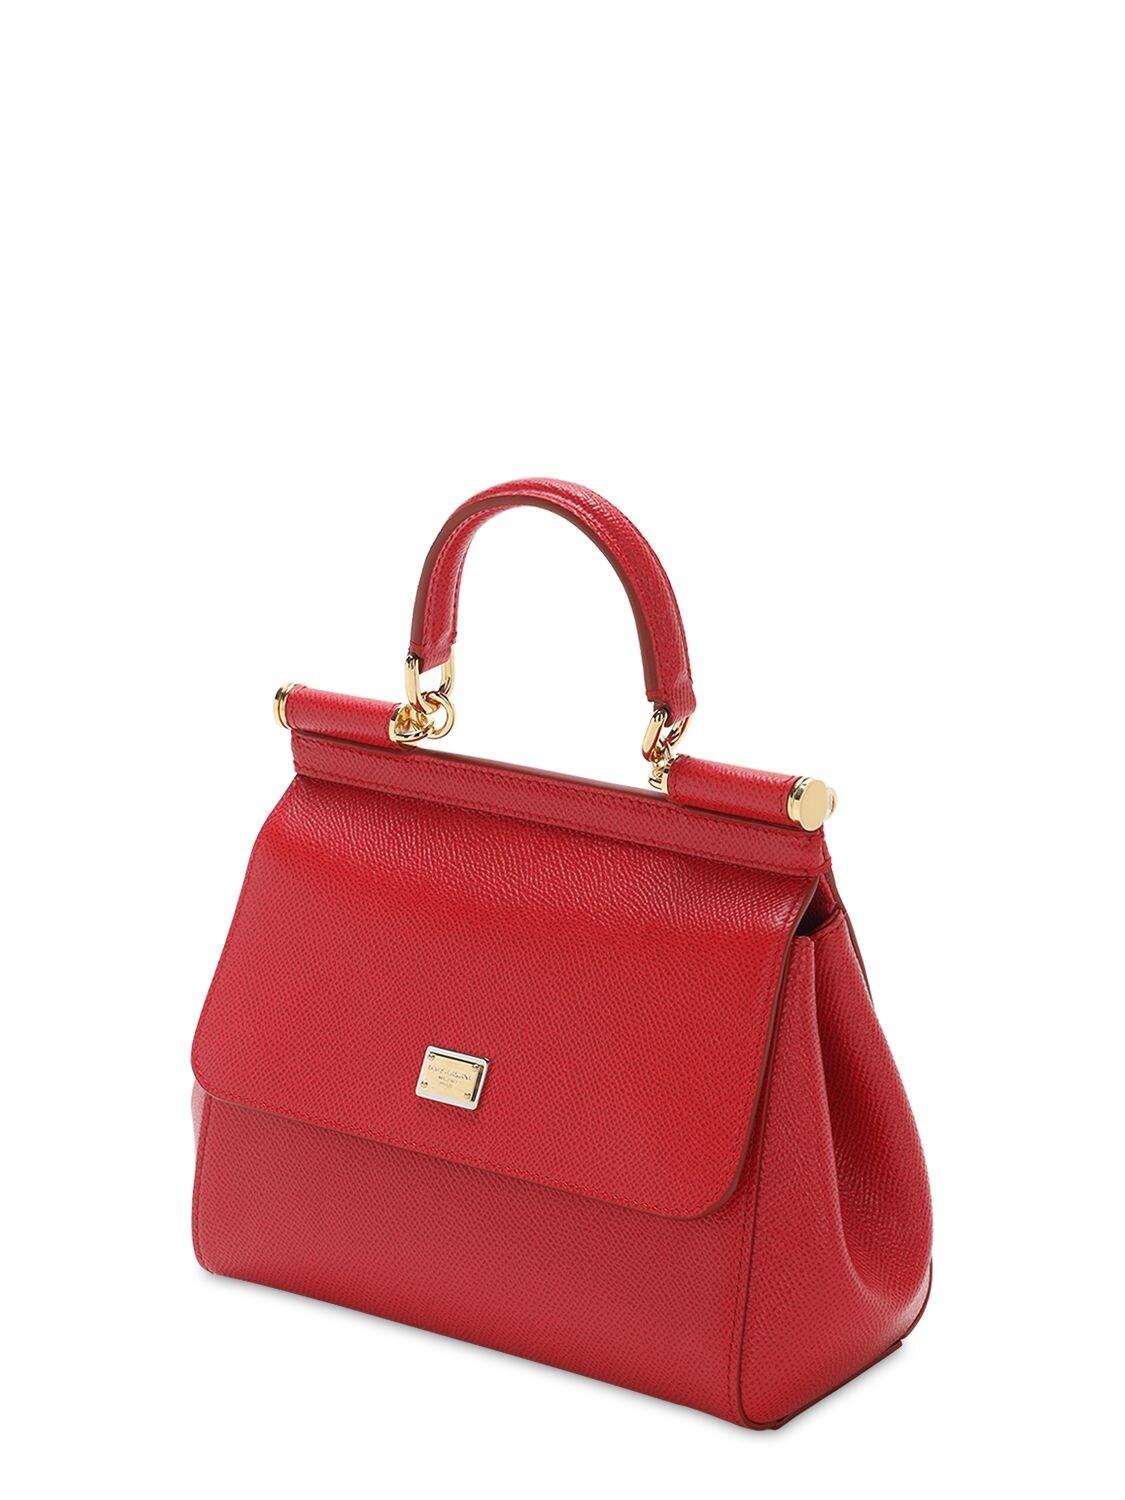 Dolce & Gabbana Medium Sicily Handbag In Dauphine Leather in Red | Lyst